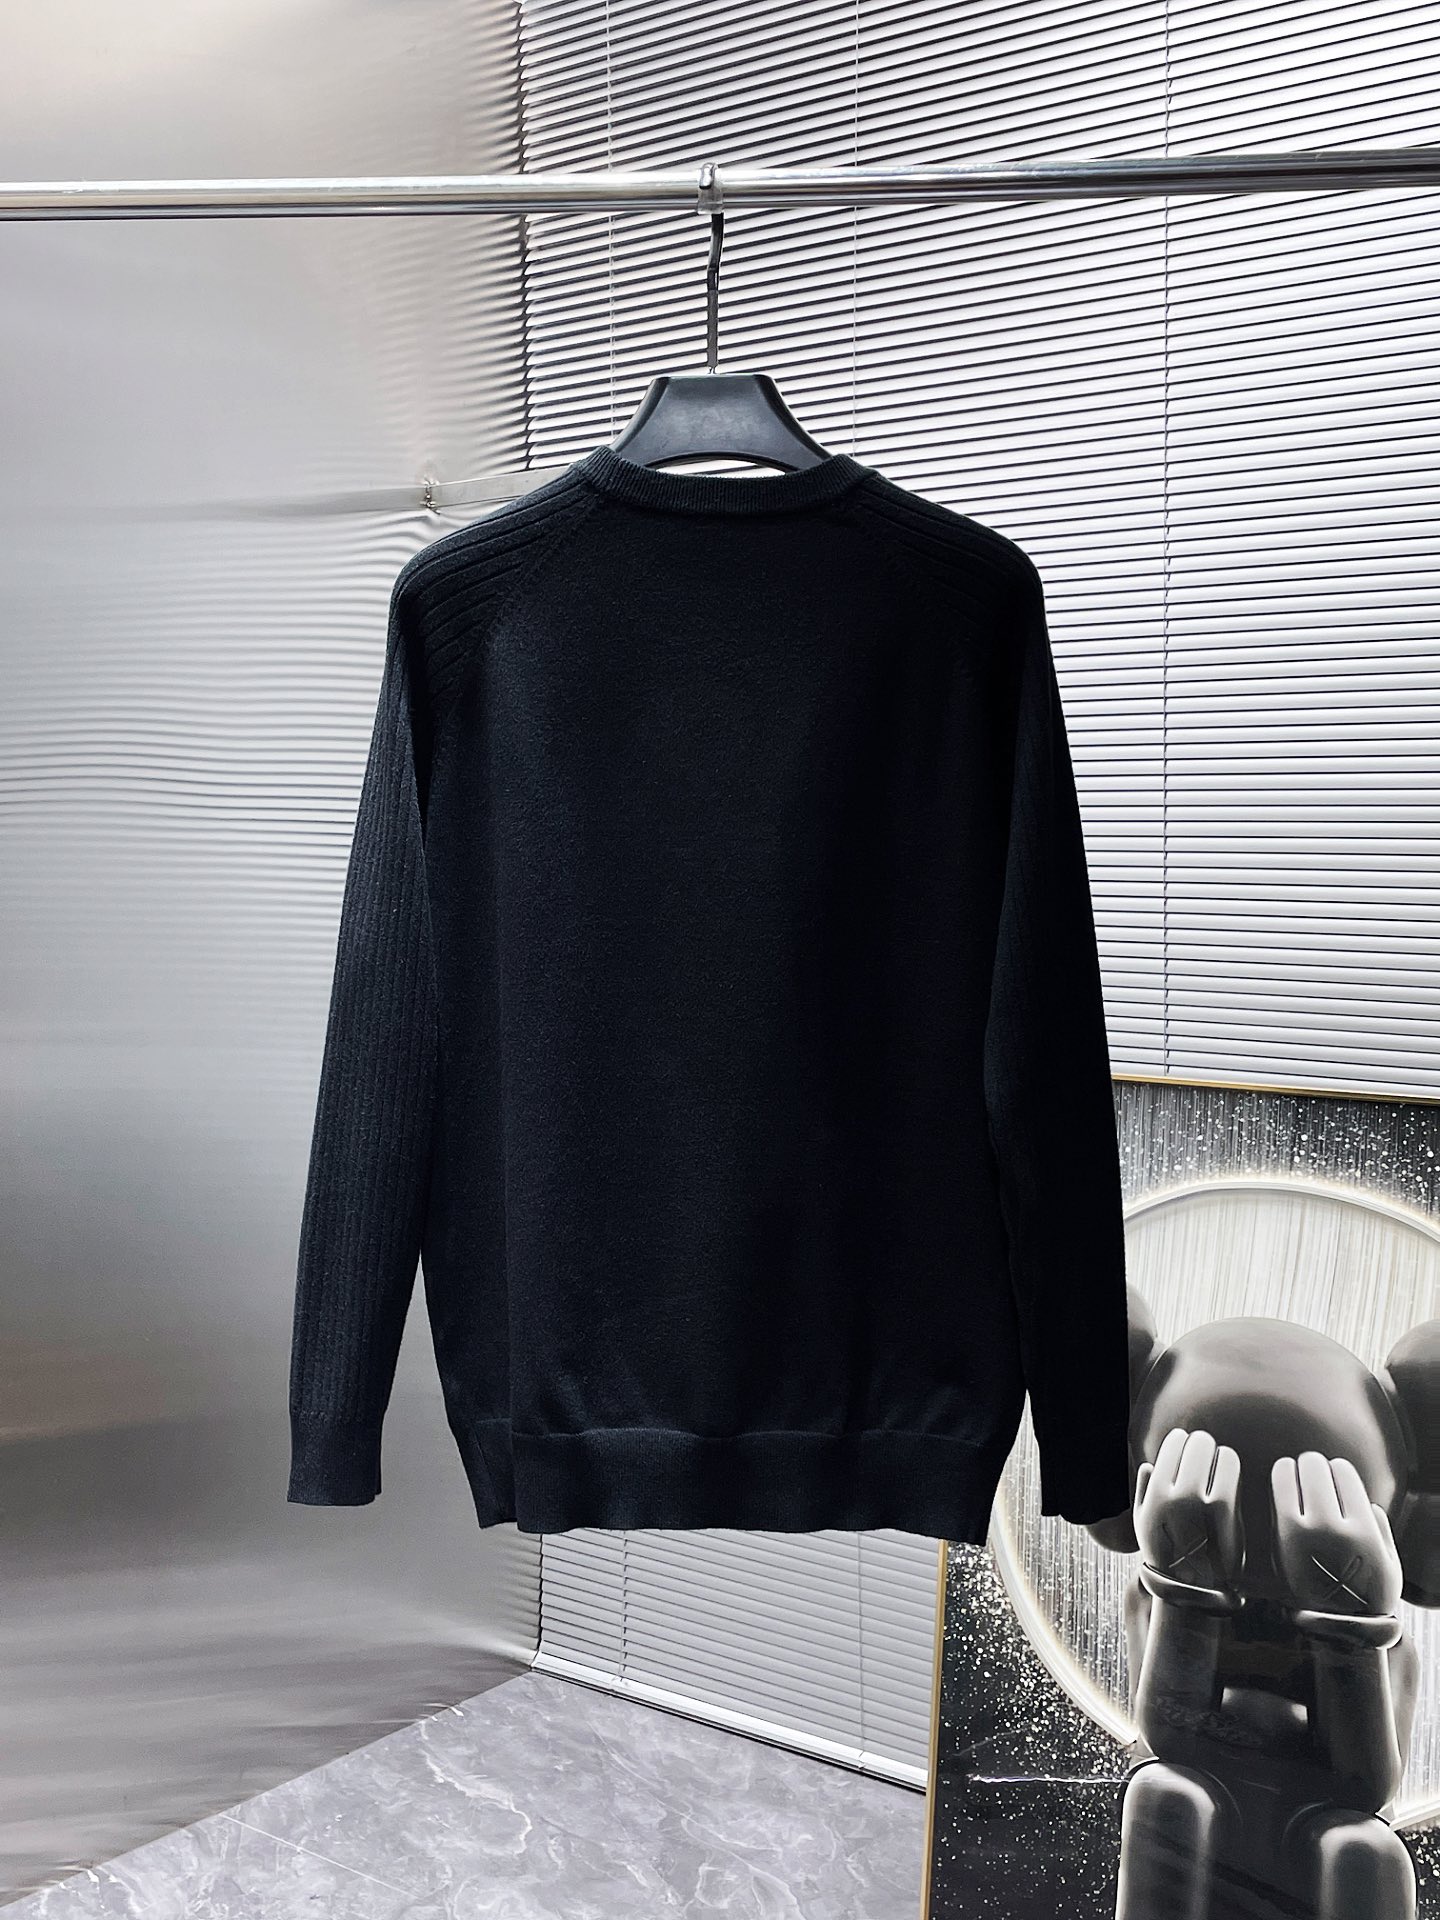 dior ディオールトップス偽物 ファッション 秋冬服 メンズ 新品 シンプル 高級品 ブラック_3